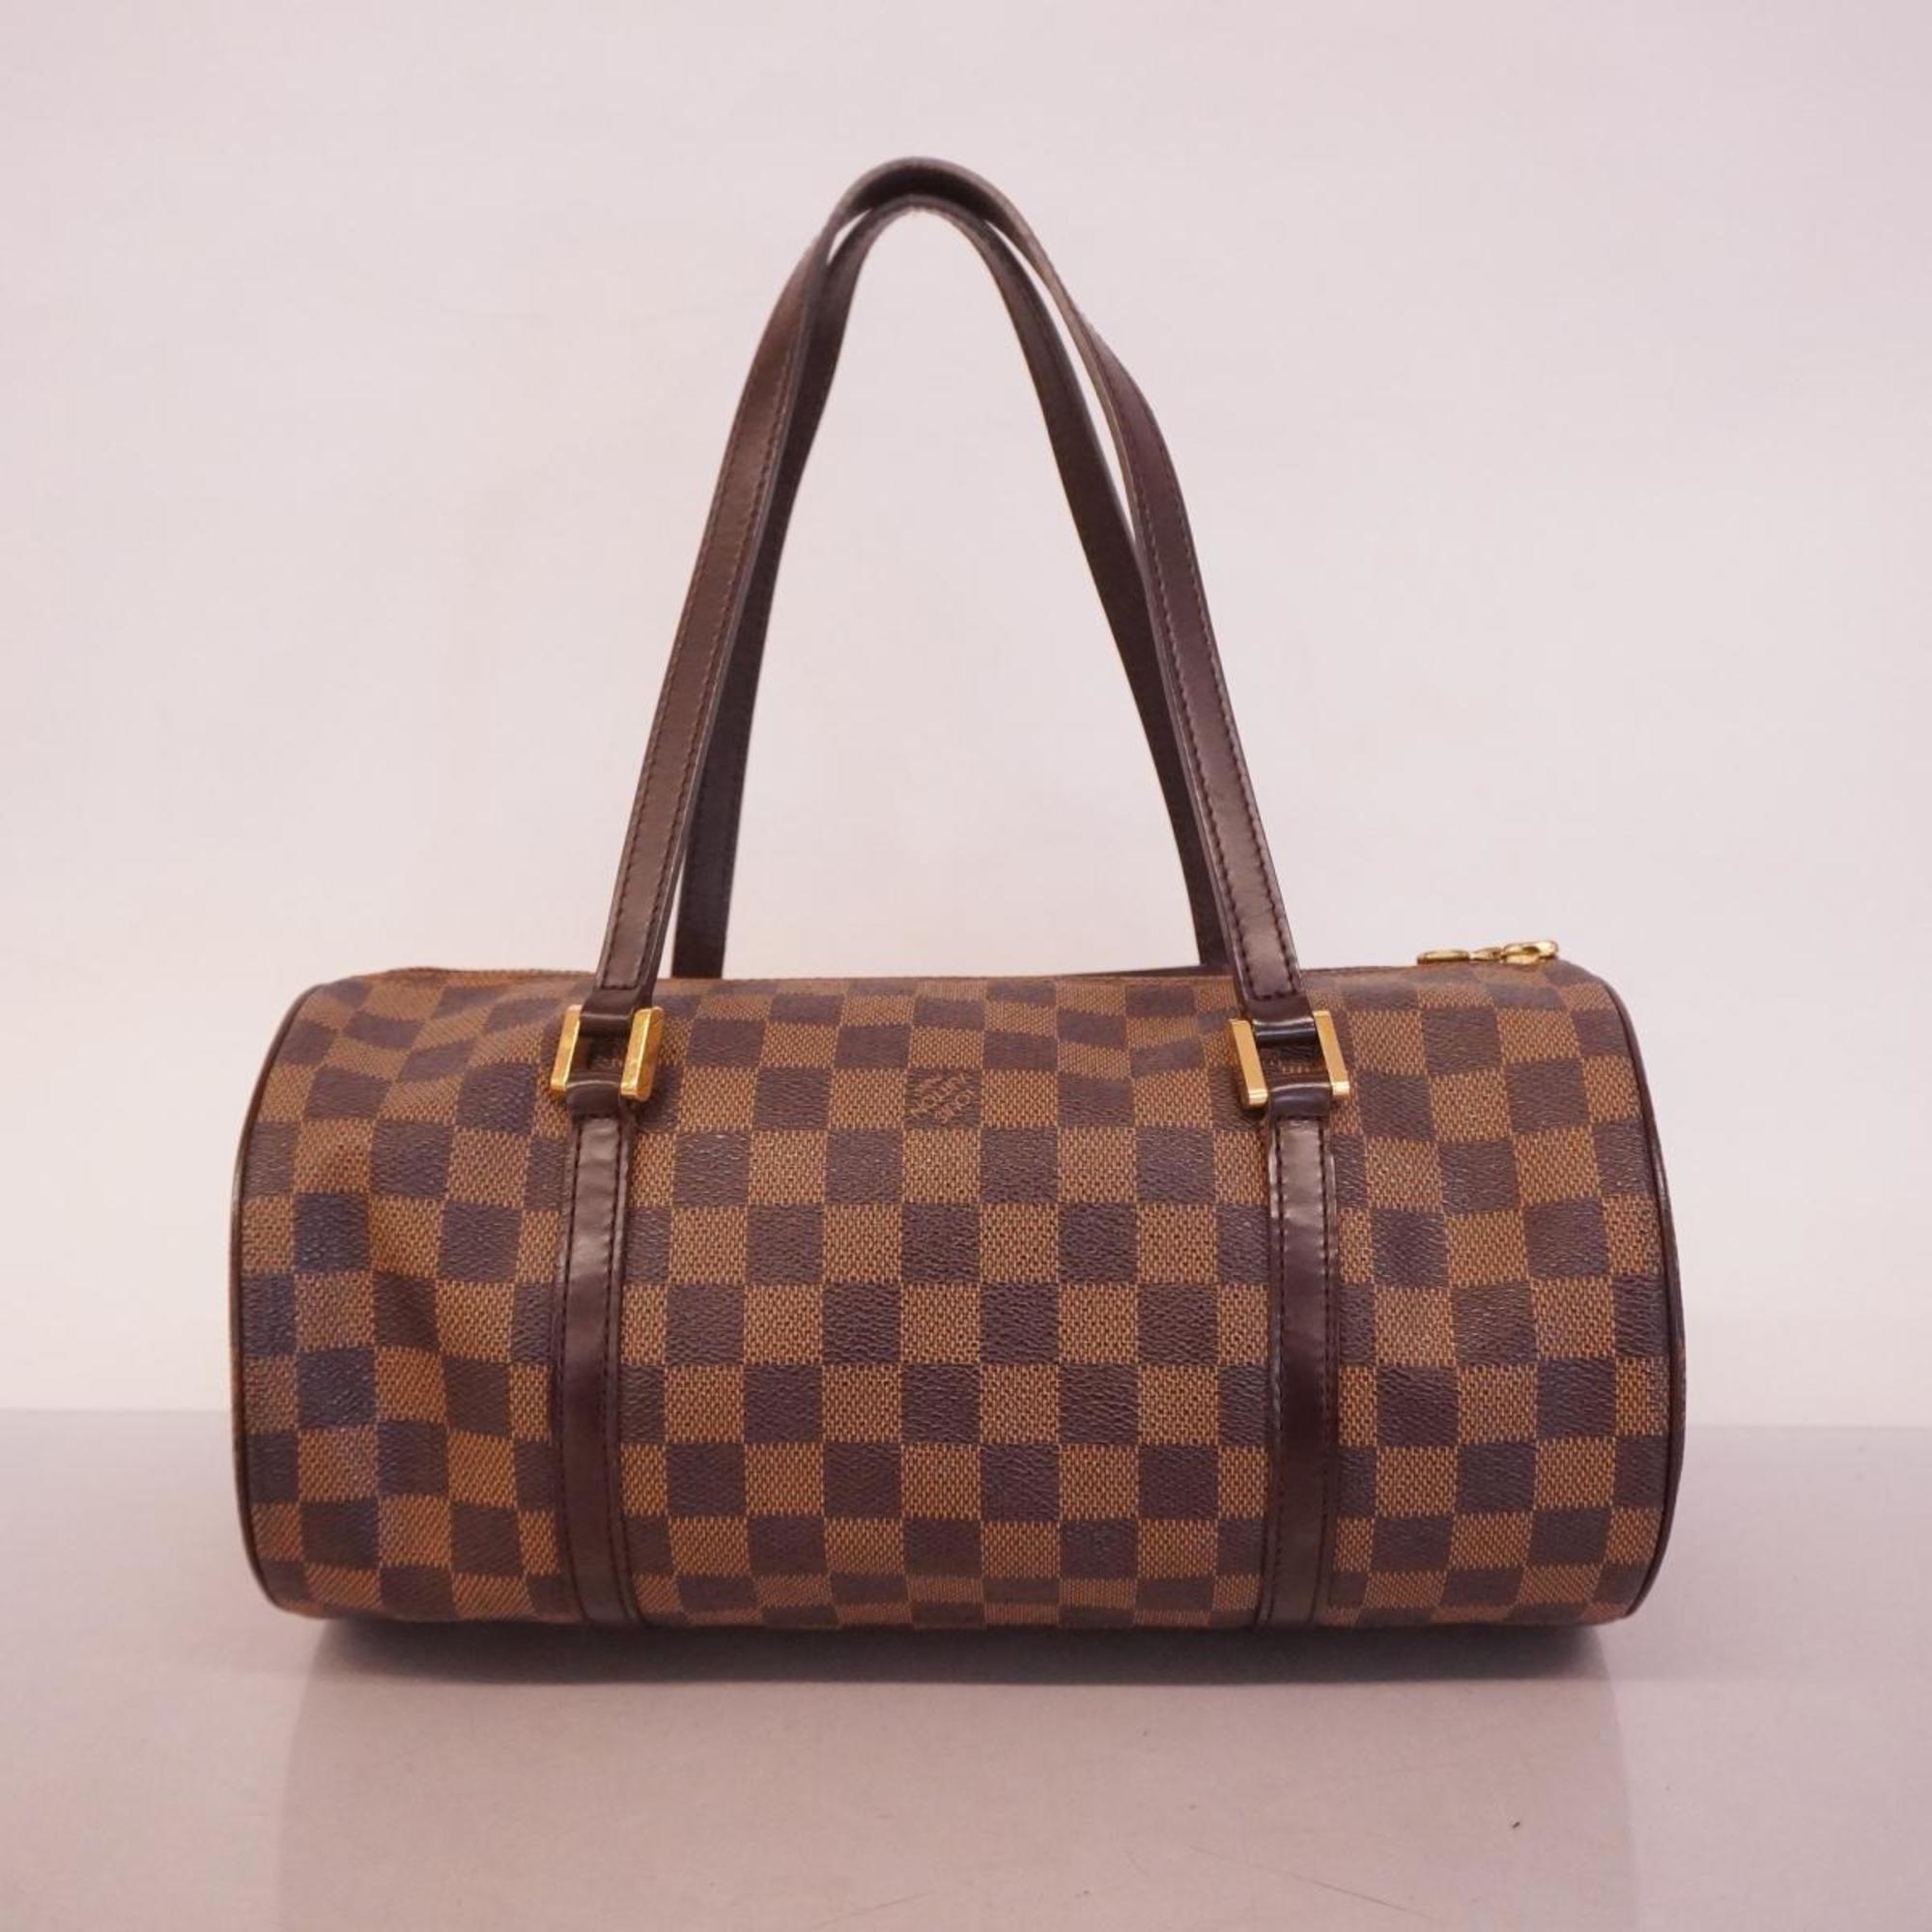 Louis Vuitton Handbag Damier Papillon 30 N51303 Ebene Ladies